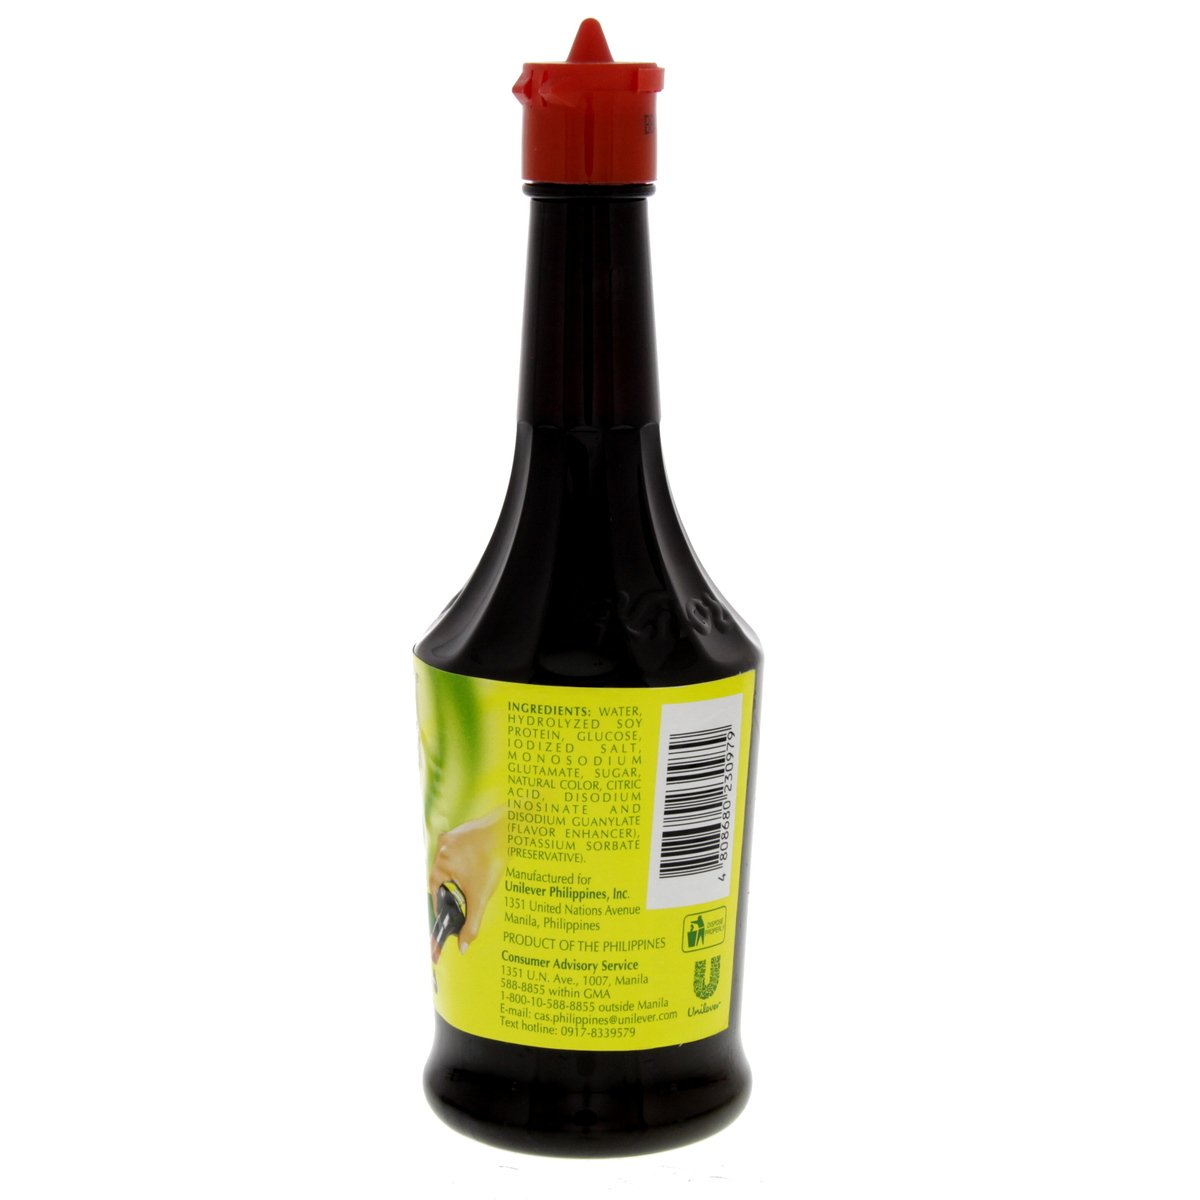 Knorr Liquid Seasoning Original 250 ml